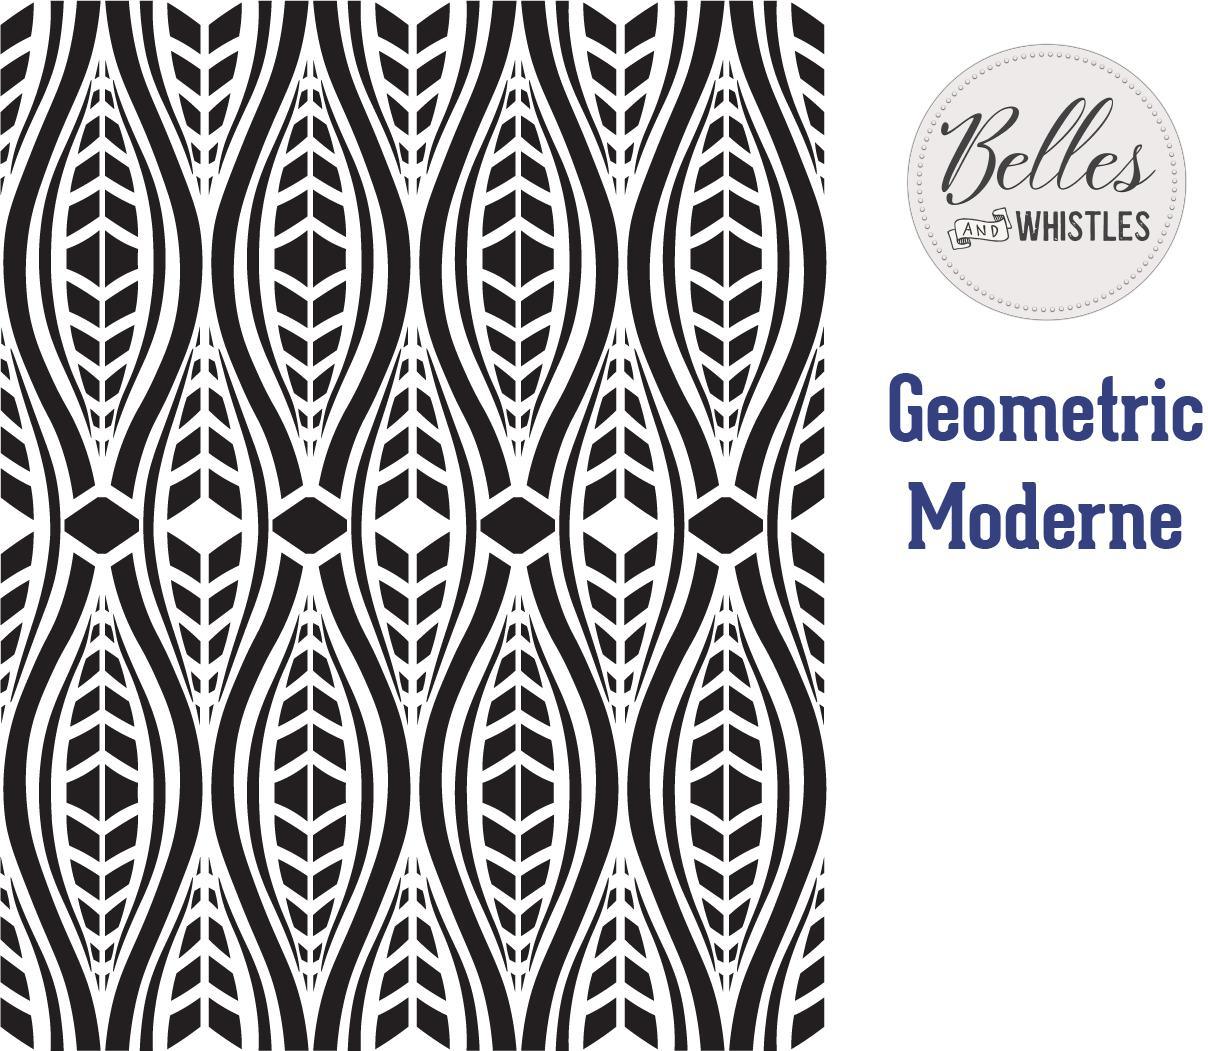 Schablone | Belles & Whistles | Geometric Moderne - Lioness Vintage